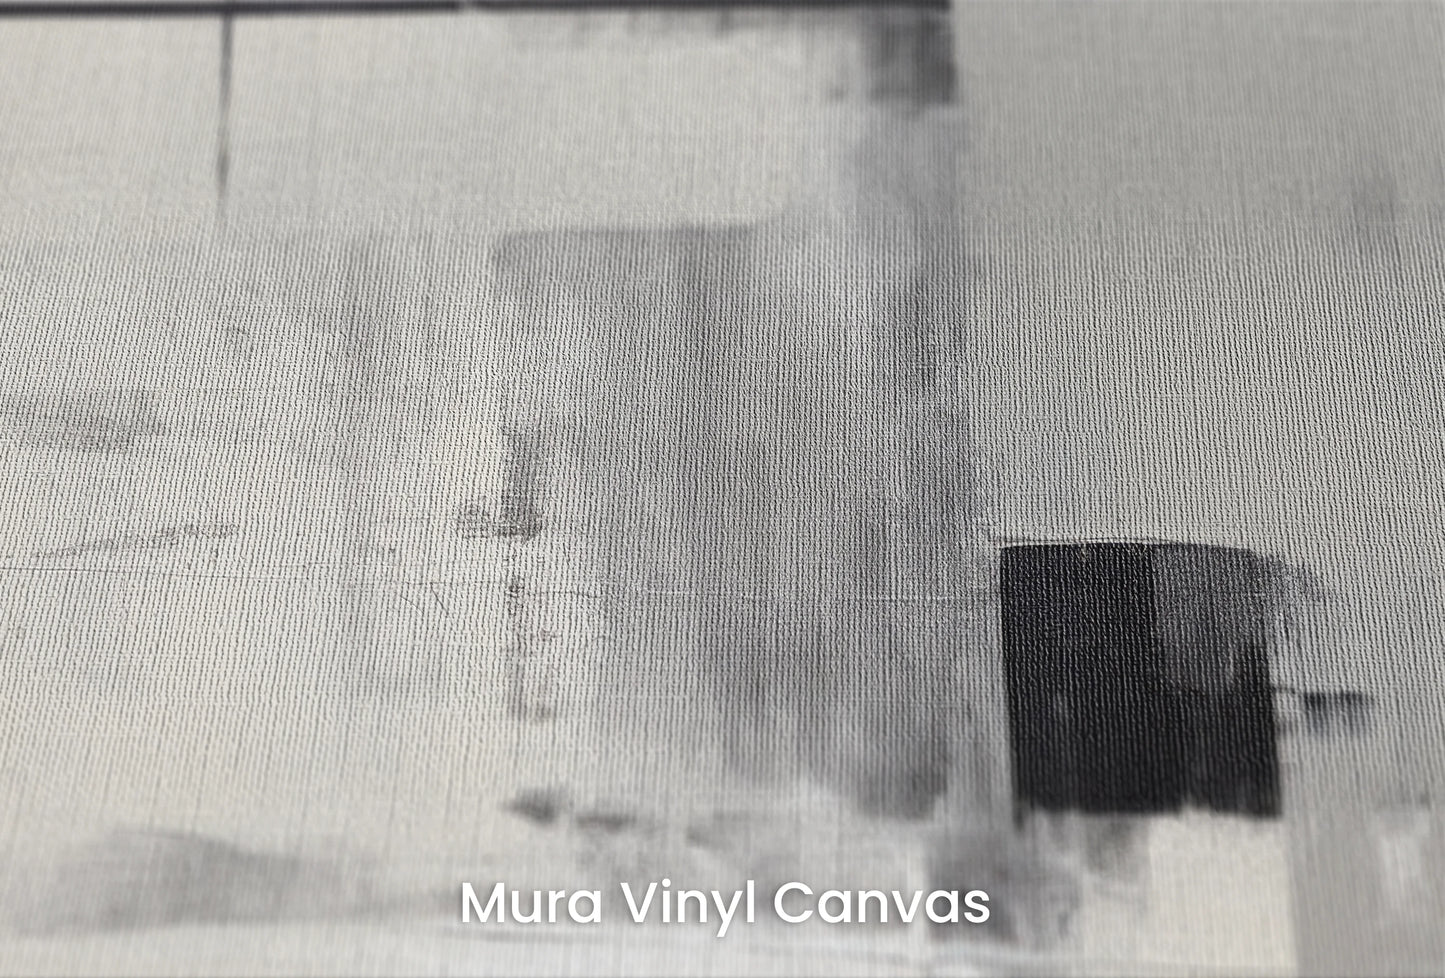 Zbliżenie na artystyczną fototapetę o nazwie Bold Divide na podłożu Mura Vinyl Canvas - faktura naturalnego płótna.